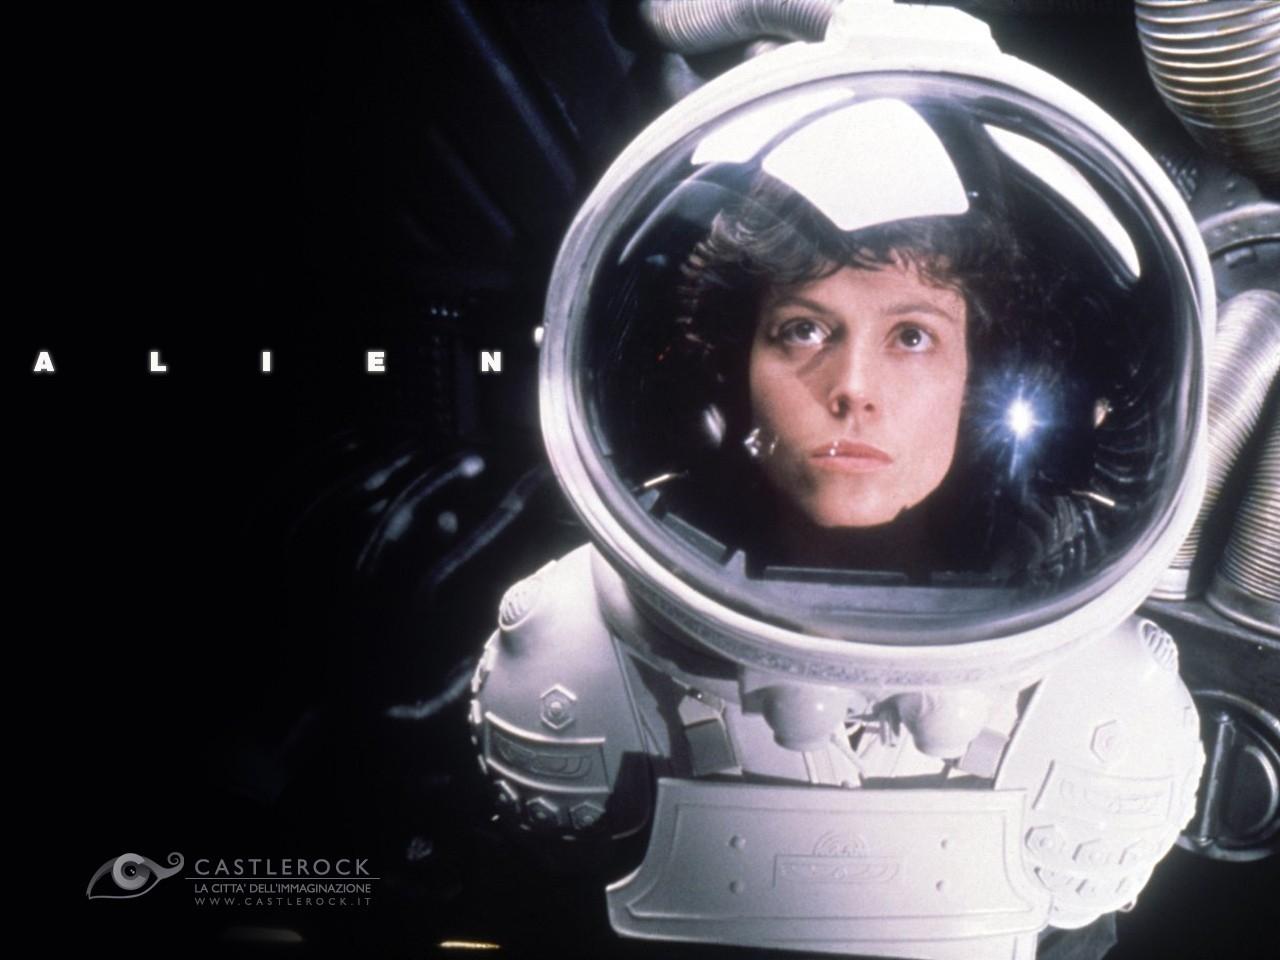 Wallpaper del film Alien con Sigourney Weaver: 61720